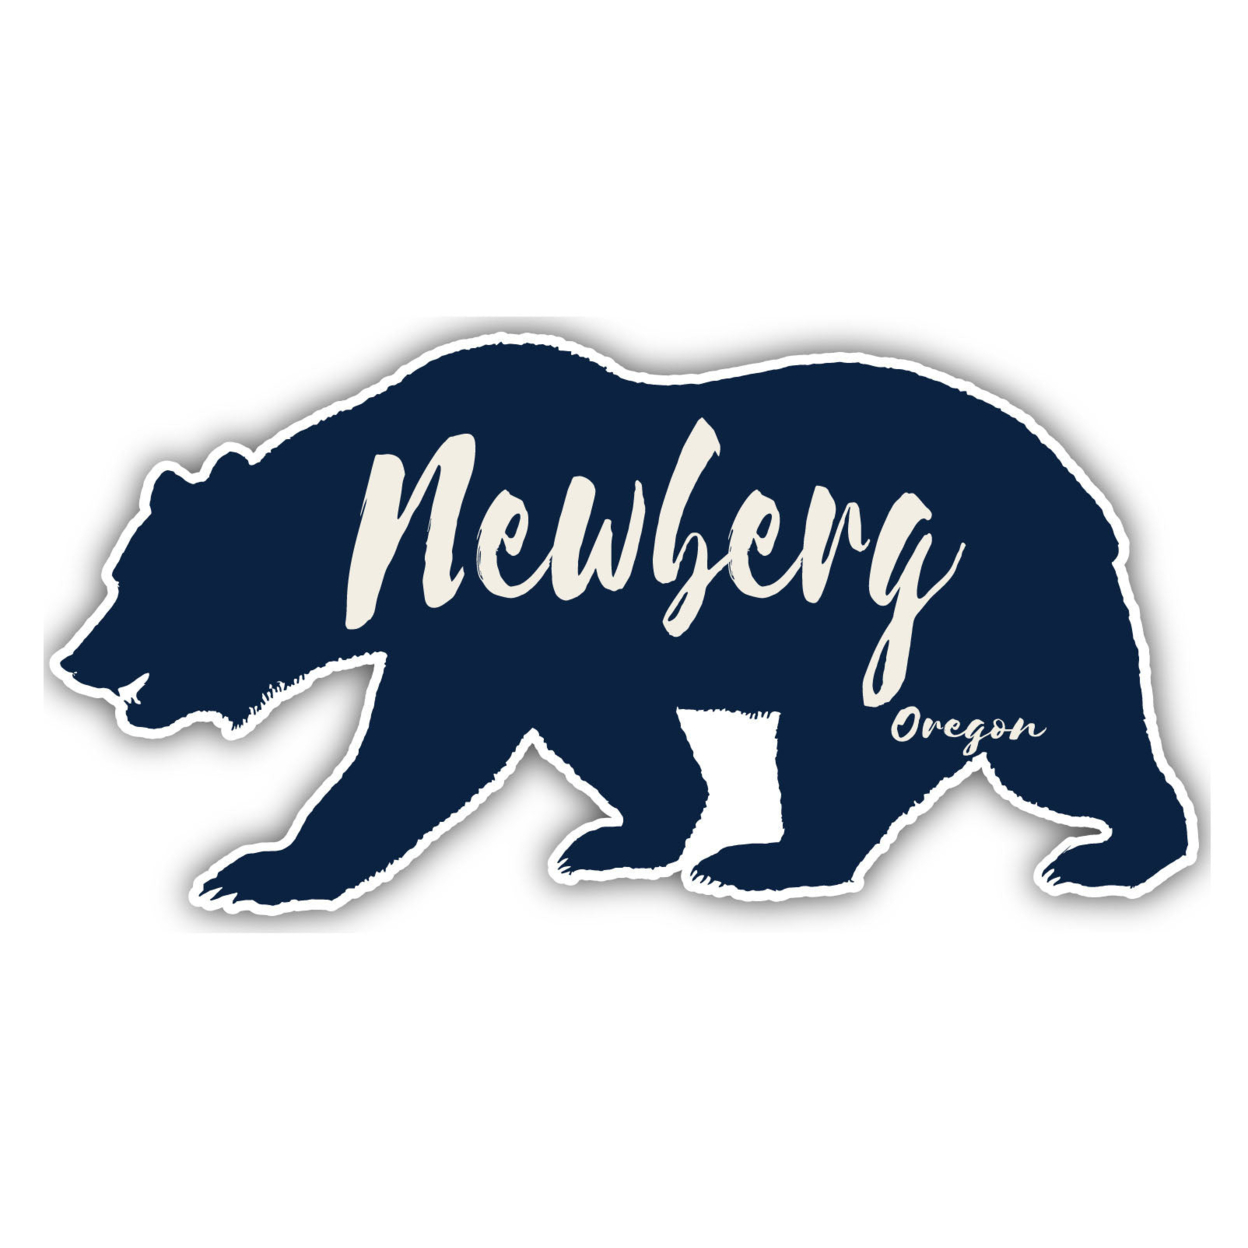 Newberg Oregon Souvenir Decorative Stickers (Choose Theme And Size) - Single Unit, 4-Inch, Bear